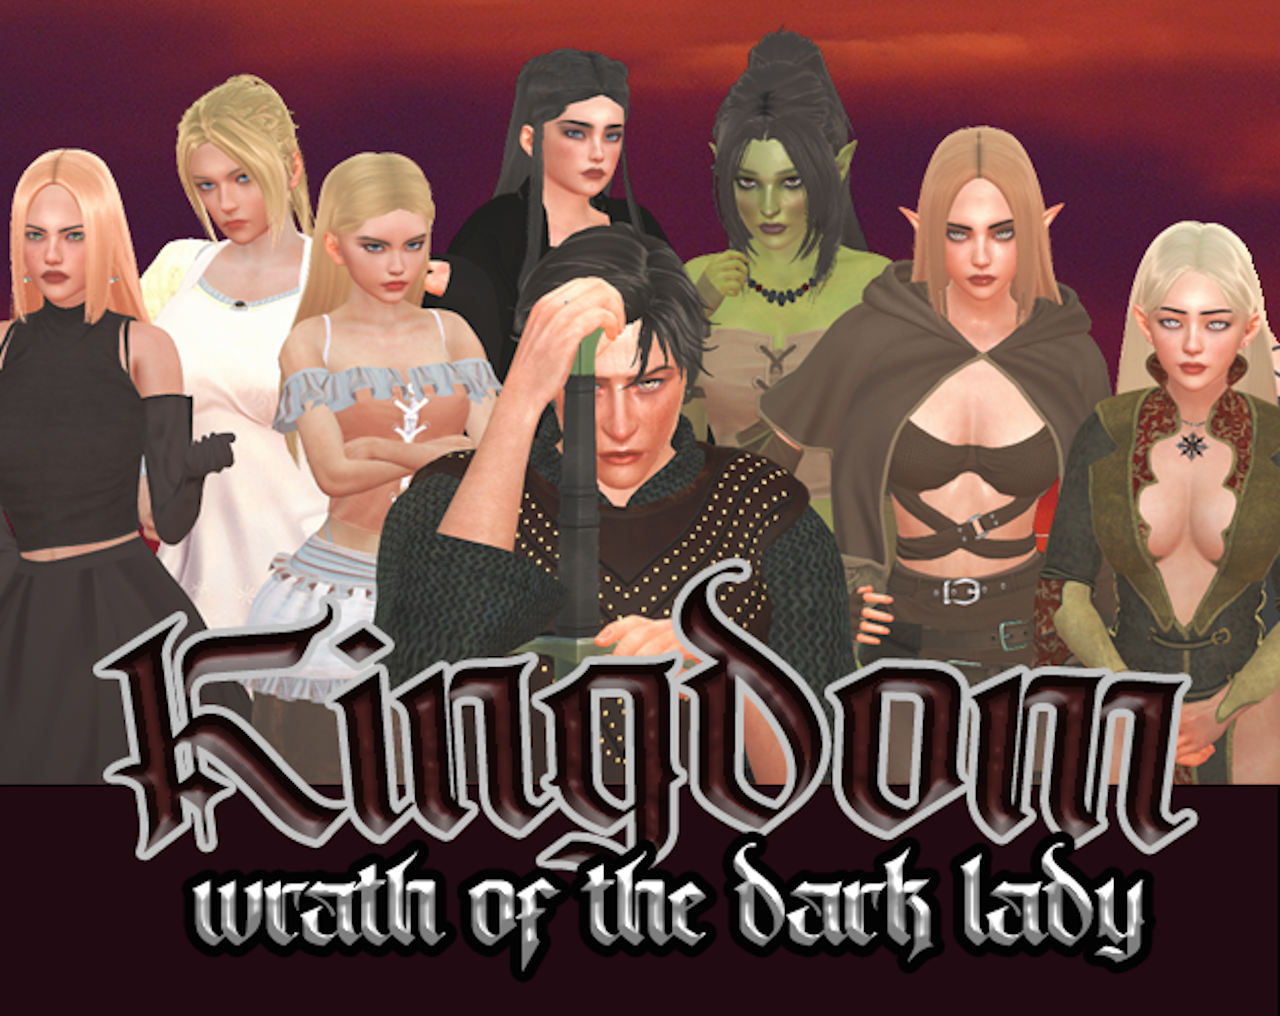 Kingdom: Wrath of the Dark Lady